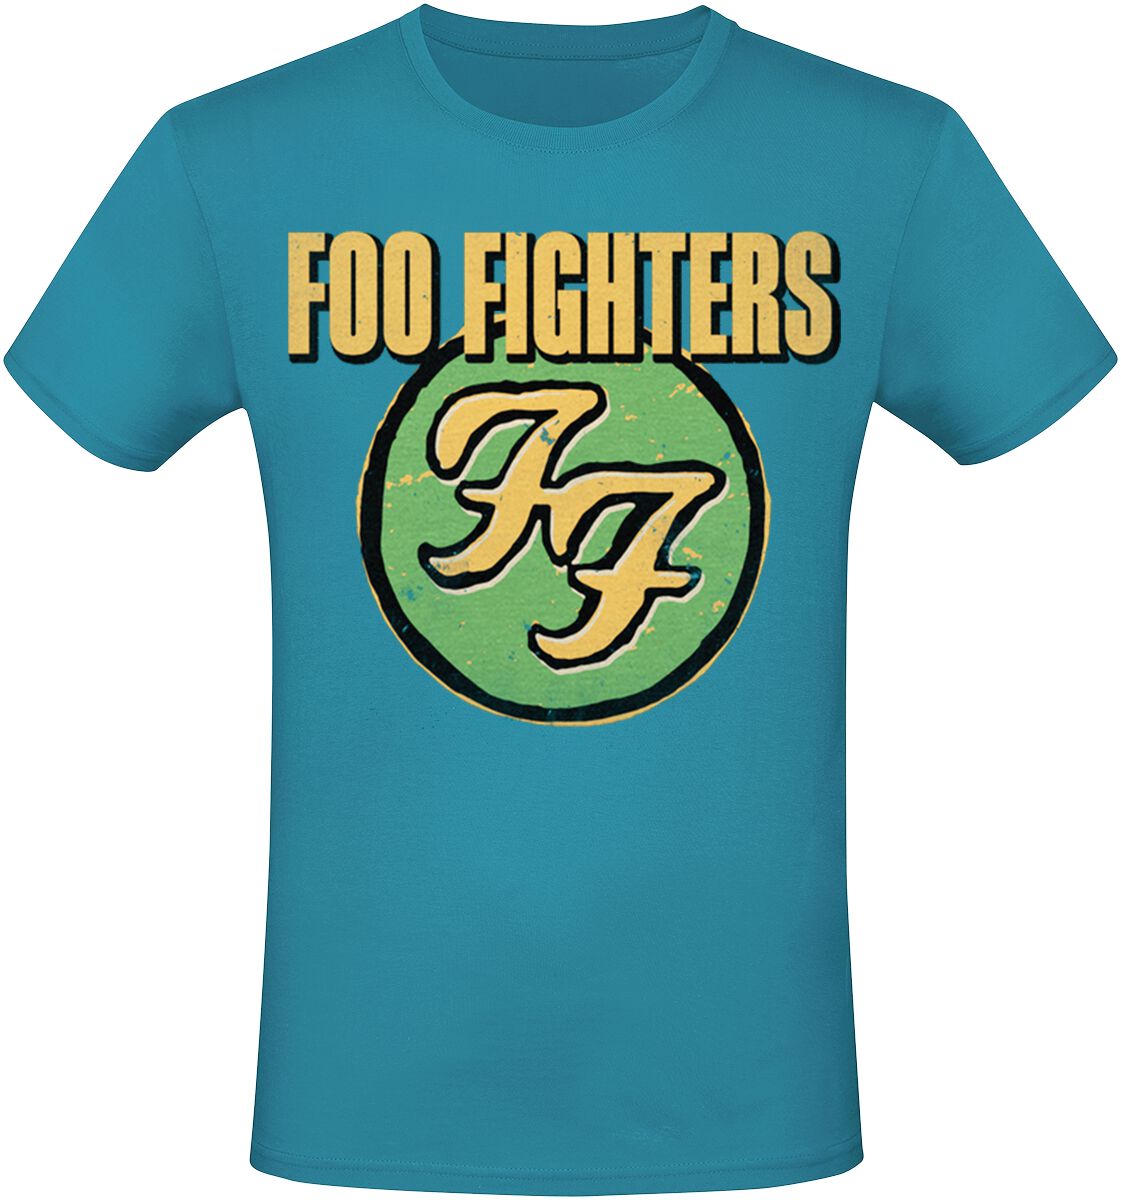 Foo Fighters Logo T-Shirt blau in 3XL